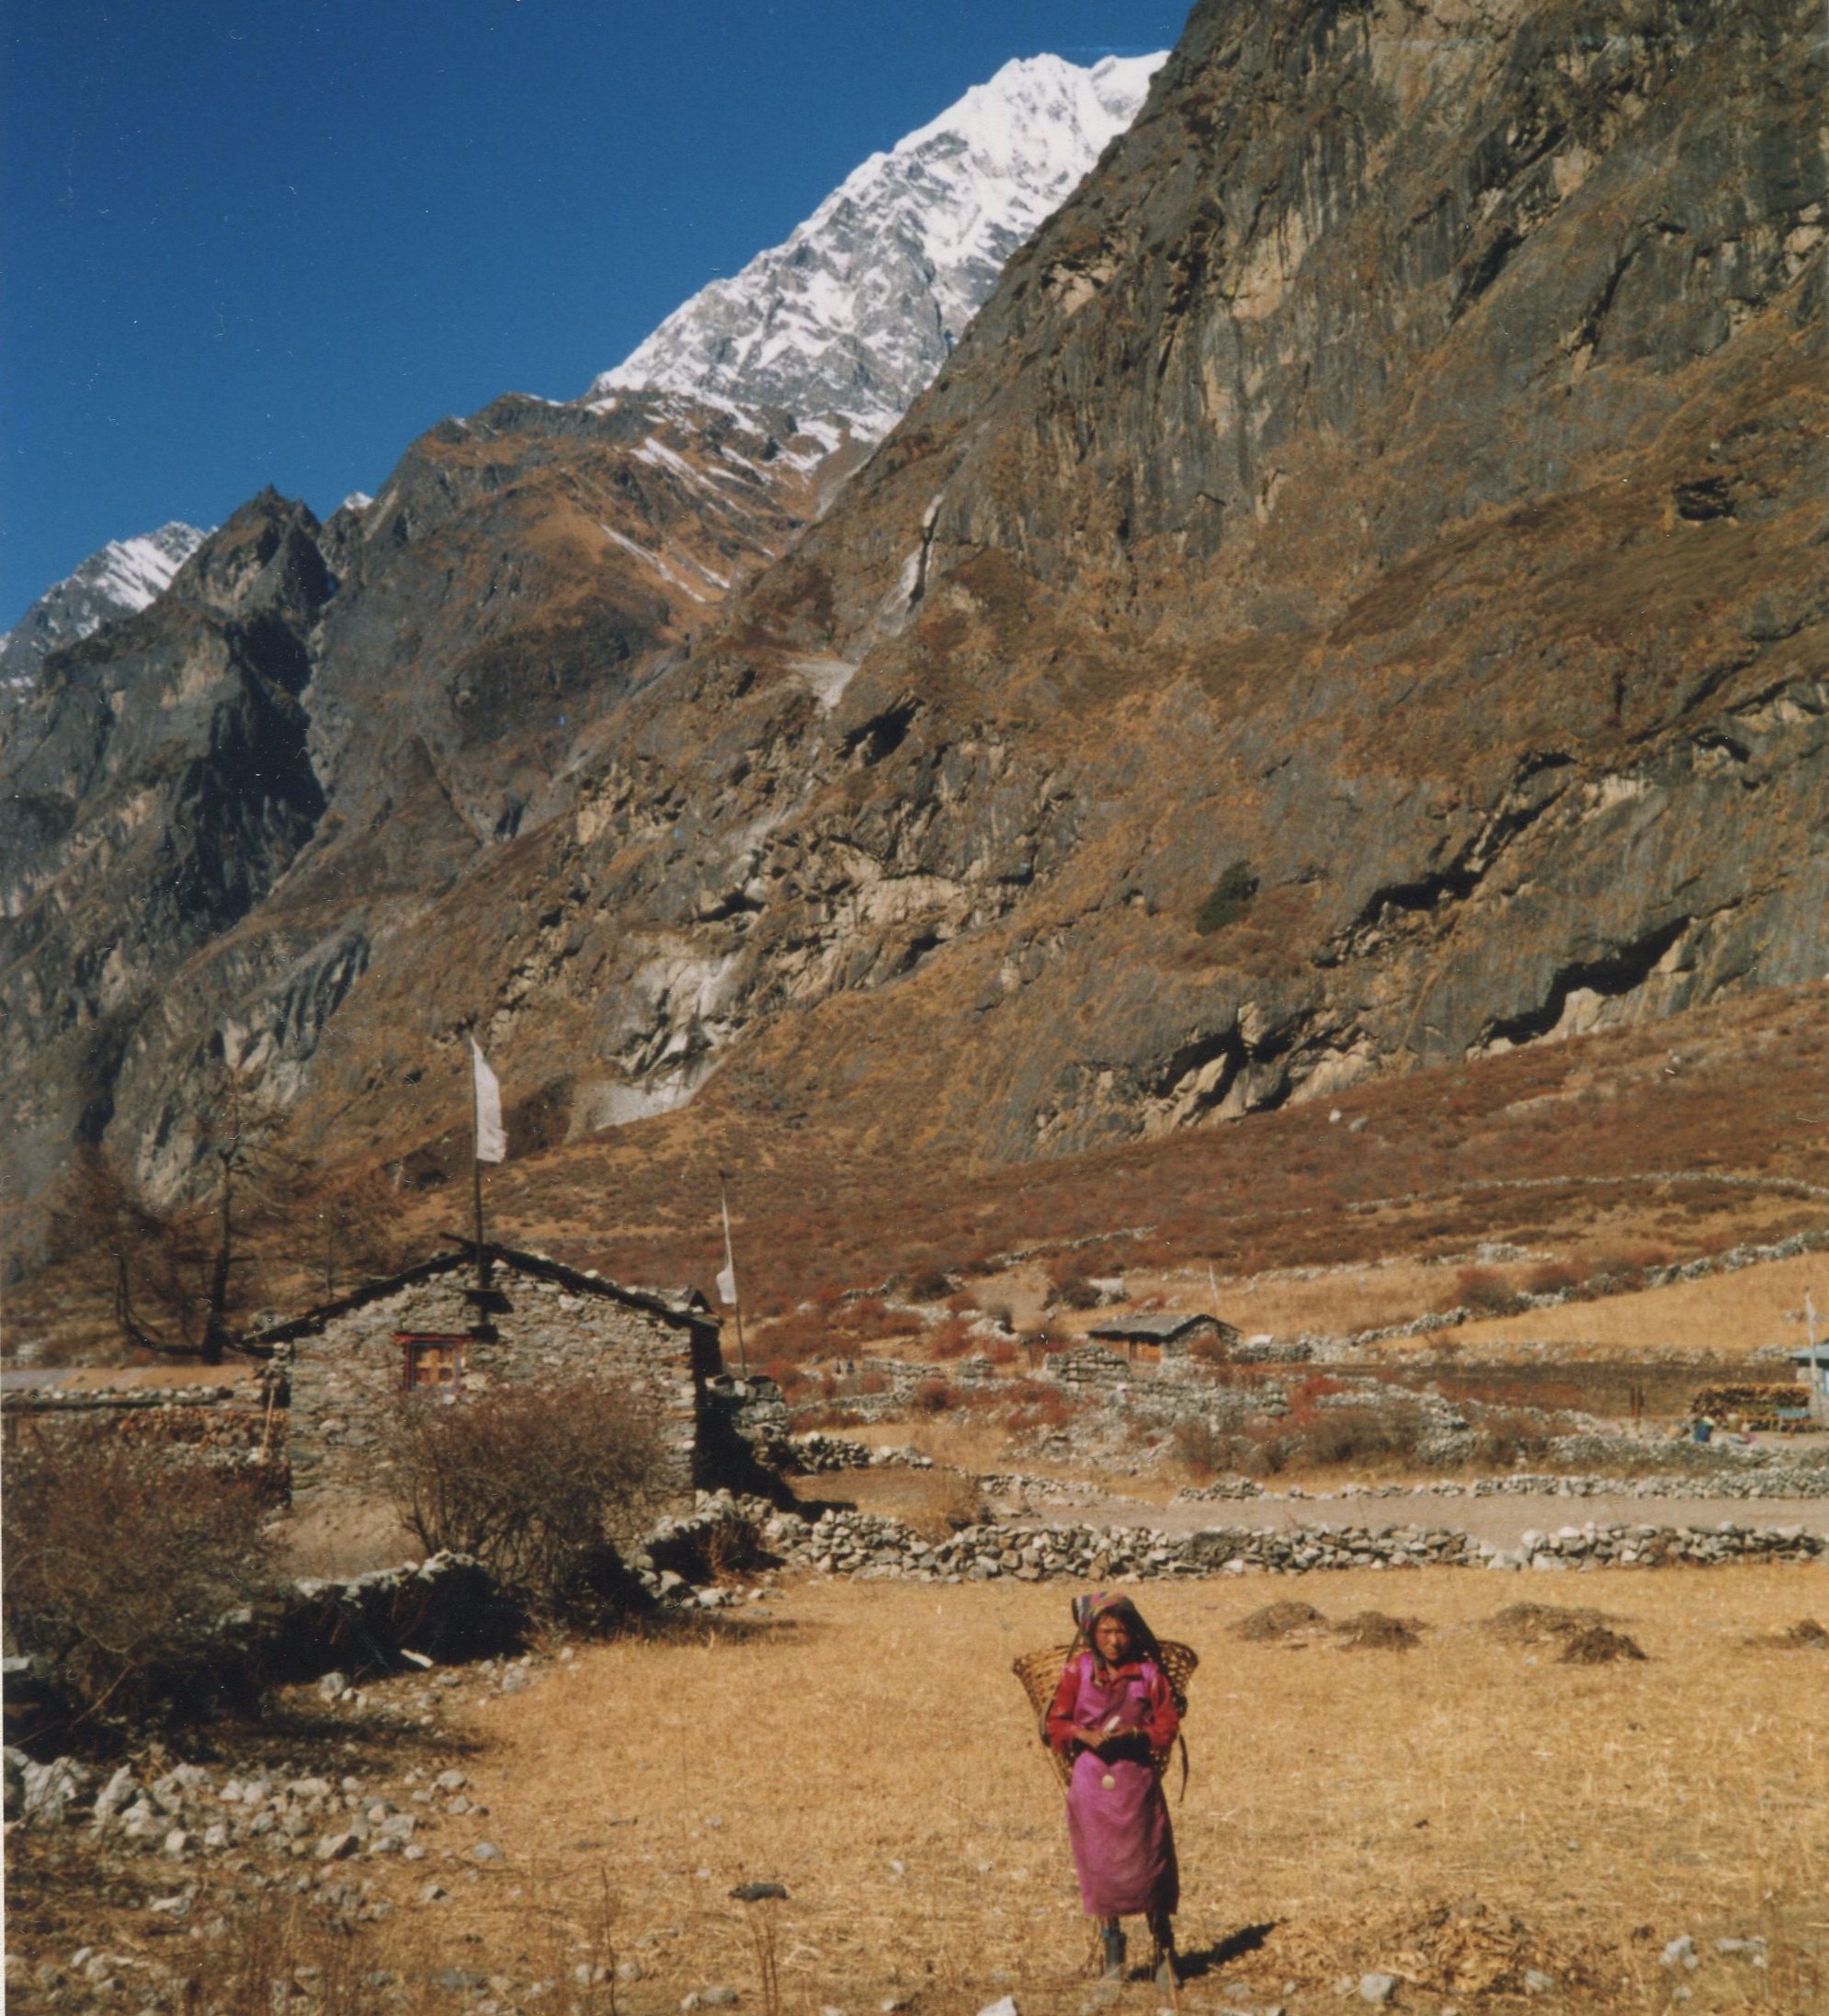 Sherpani ( Sherpa girl / woman ) in Langtang Valley of the Nepal Himalaya